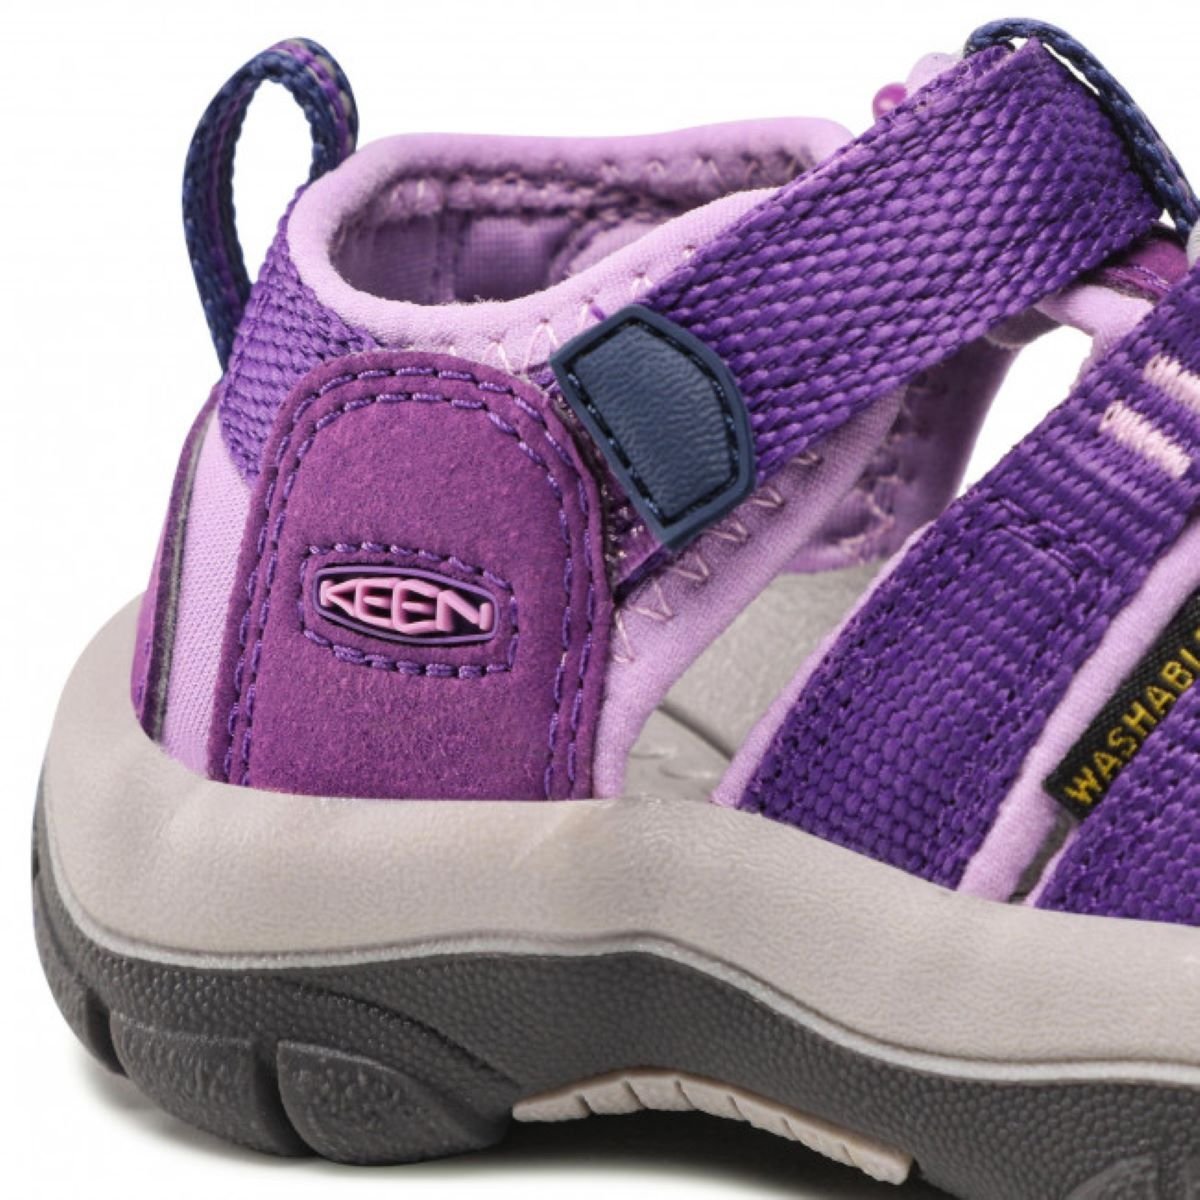 Взуття дитяче Keen Newport H2 J - фіолетове